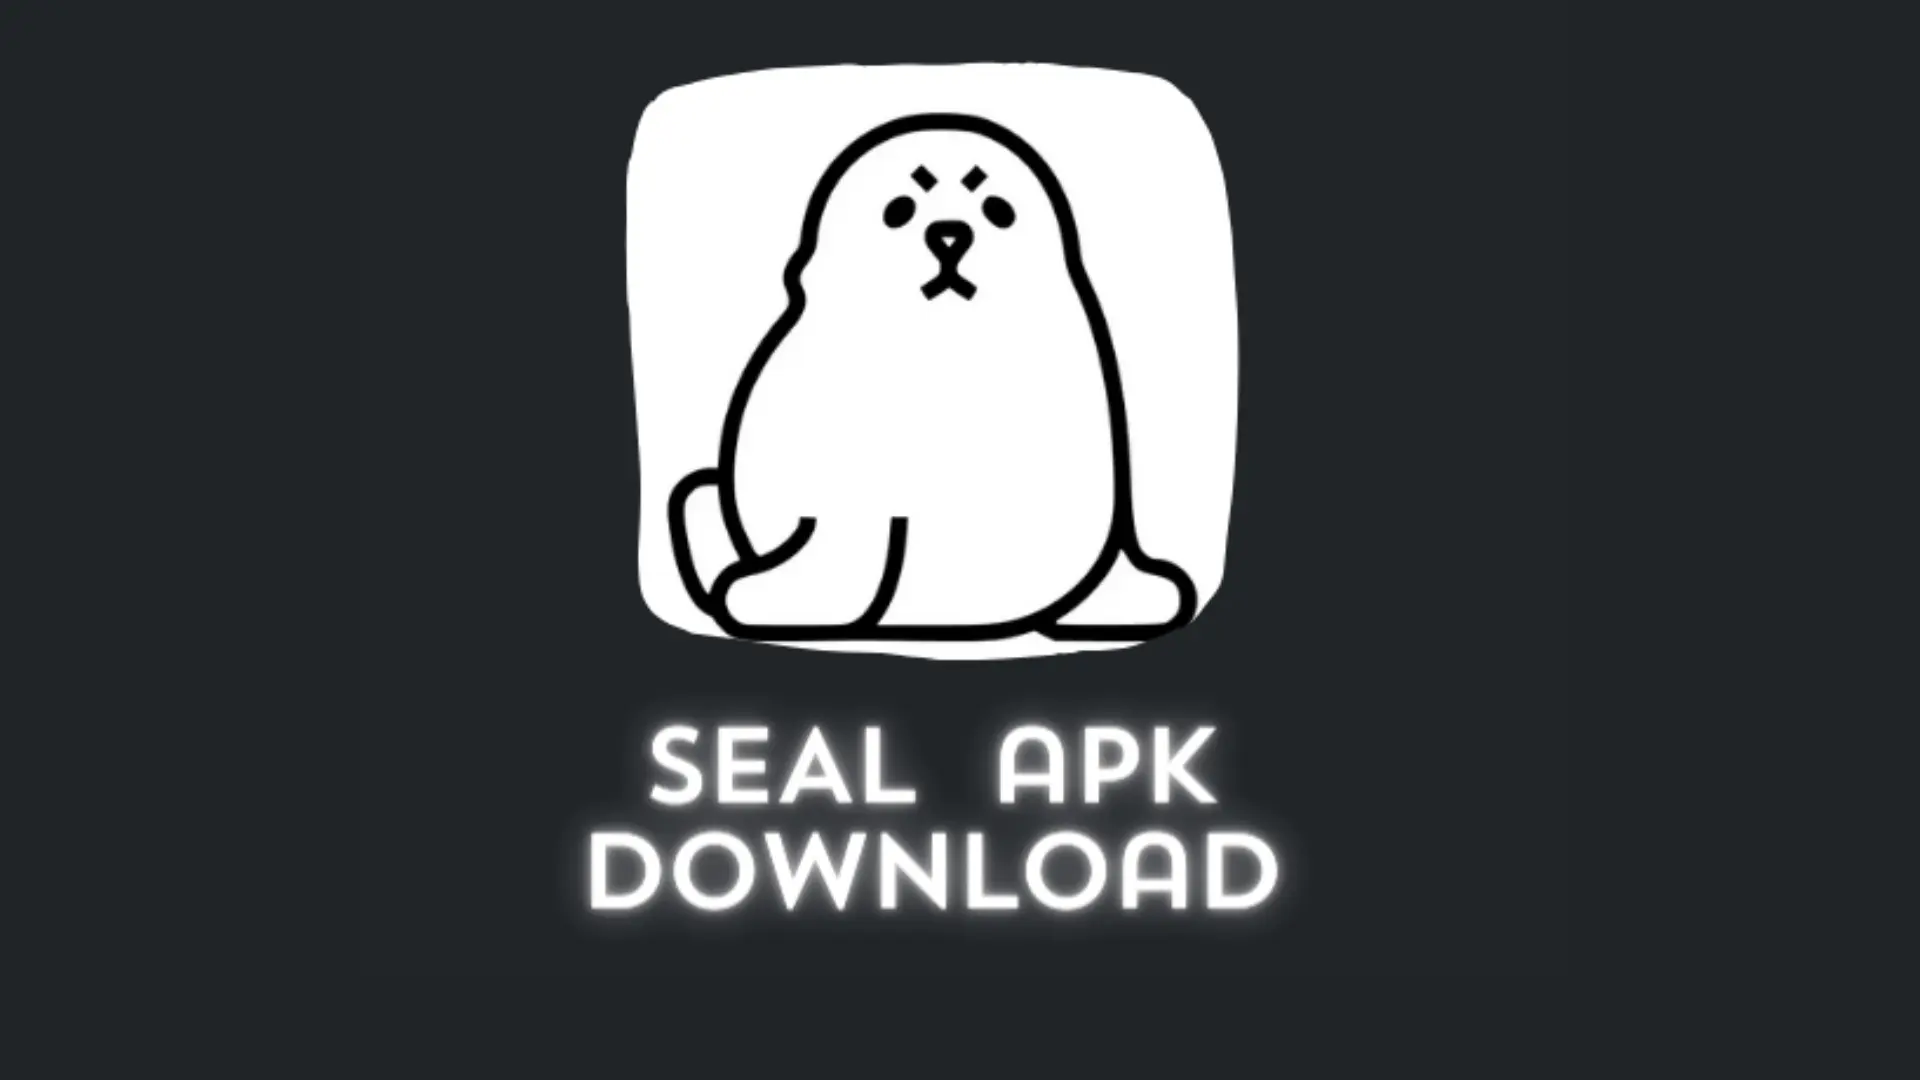 SEAL APK DOWNLAOD BANNER